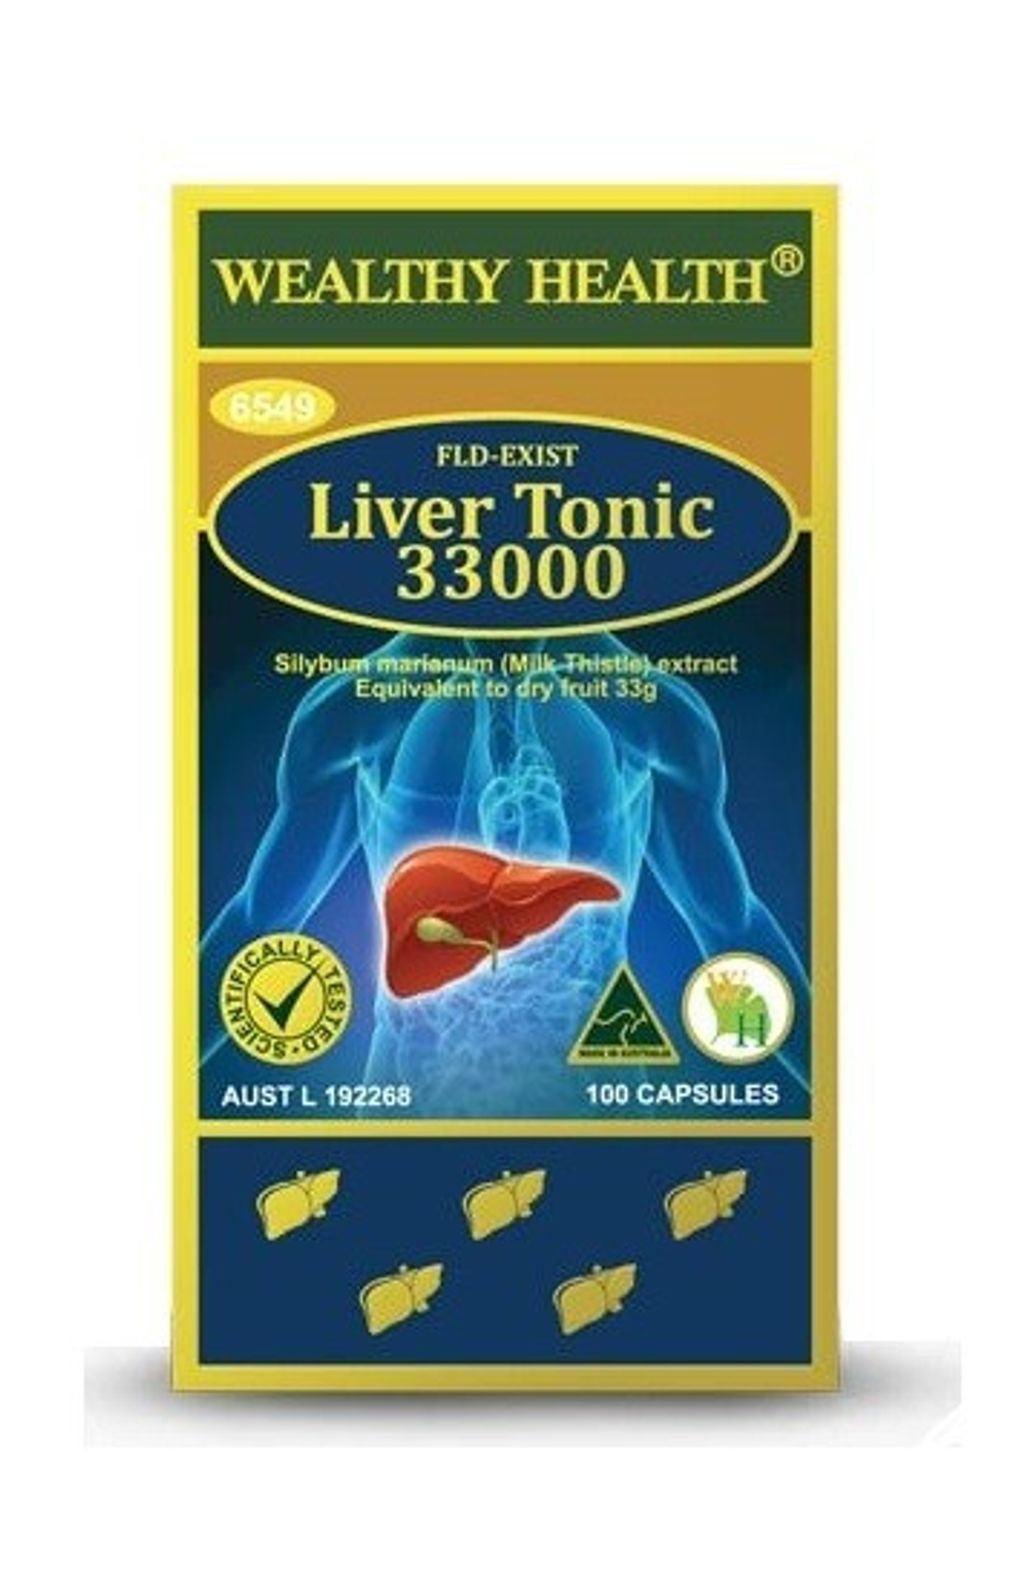 liver_tonic_33000_wealthy_health.jpg